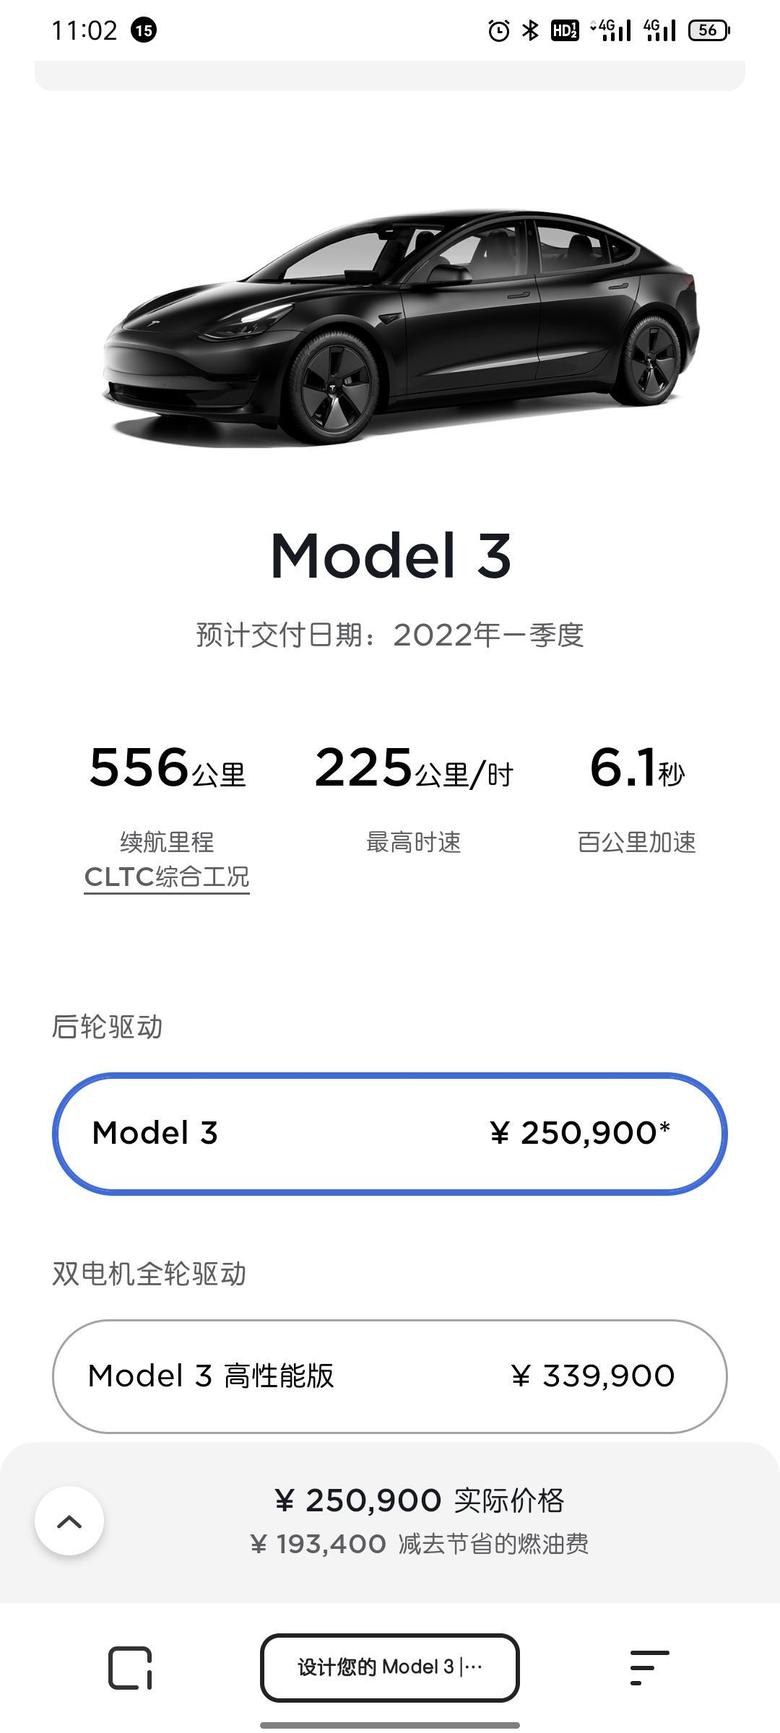 model 3 看官网介绍，新款涨价了，已经预定的用户不受影响吧？